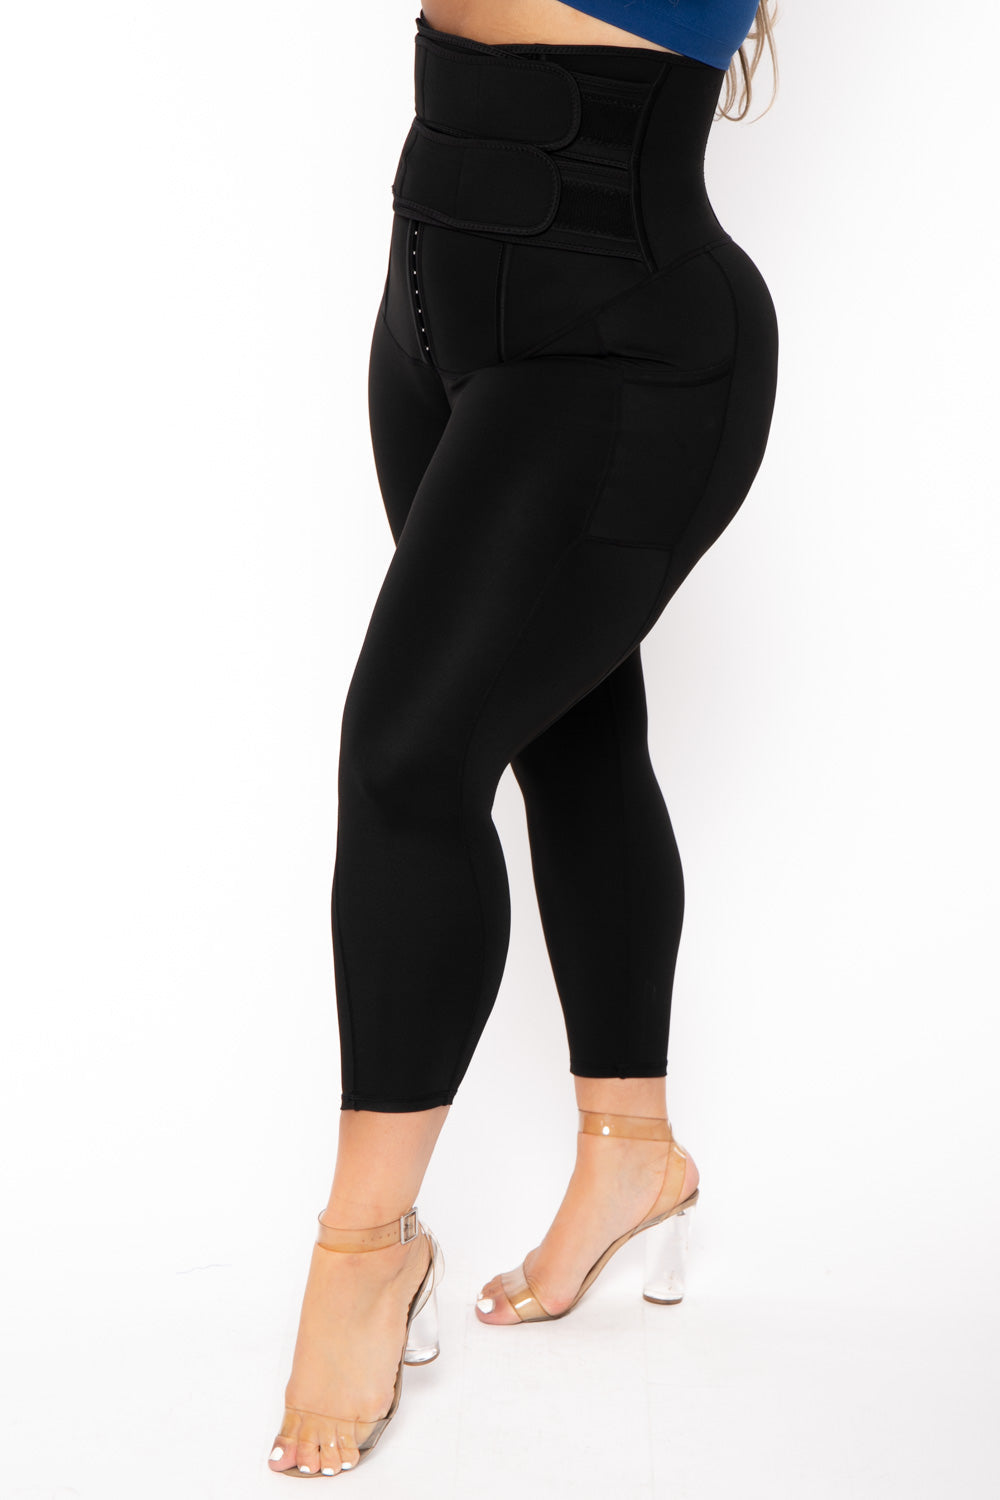 SHAPERIN Women's Seamless Anti-Cellulite Yoga Leggings Sculpting Sweat  Fitness Slim Pants 